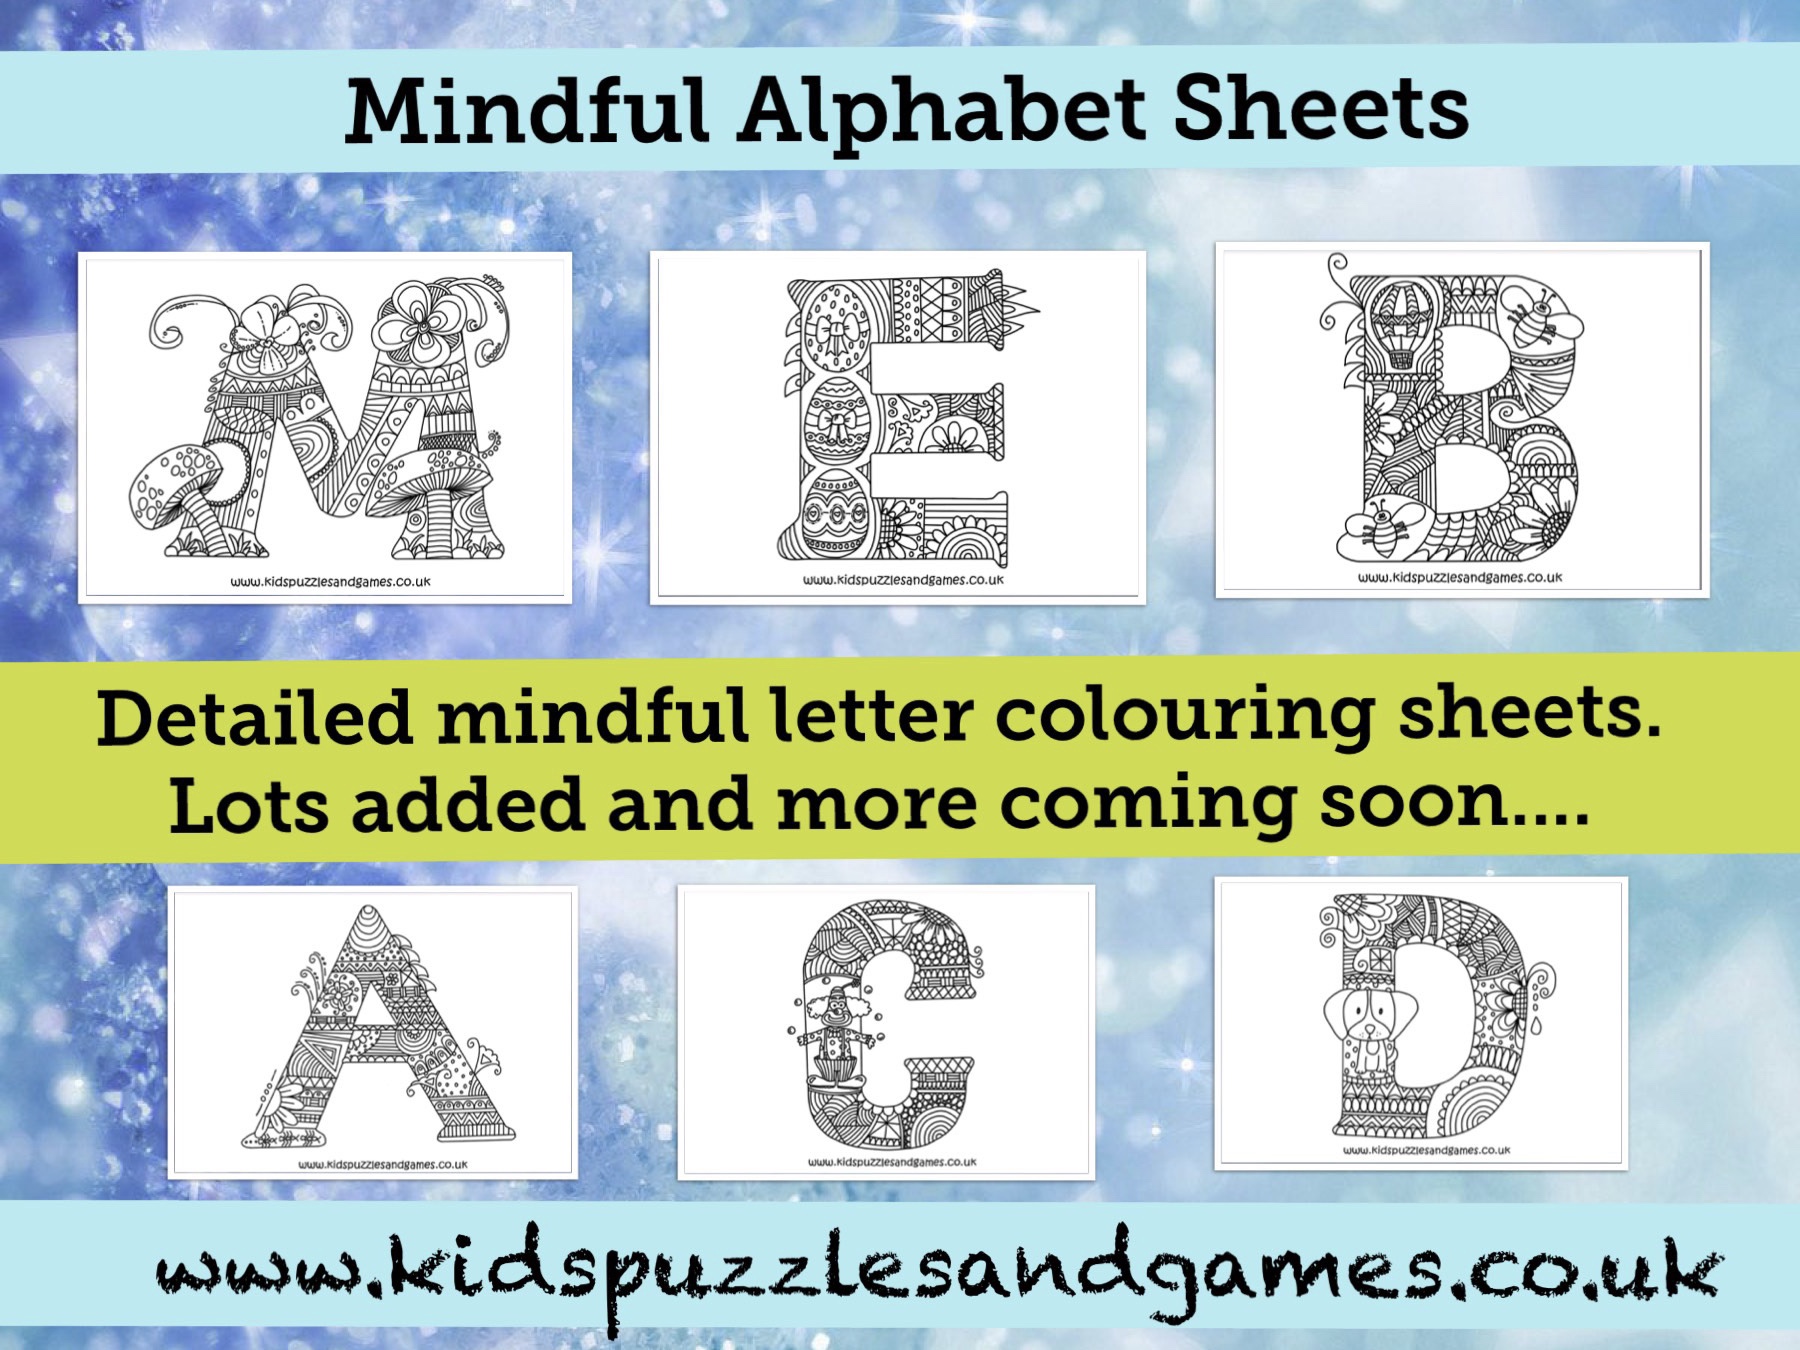 Mindful alphabet